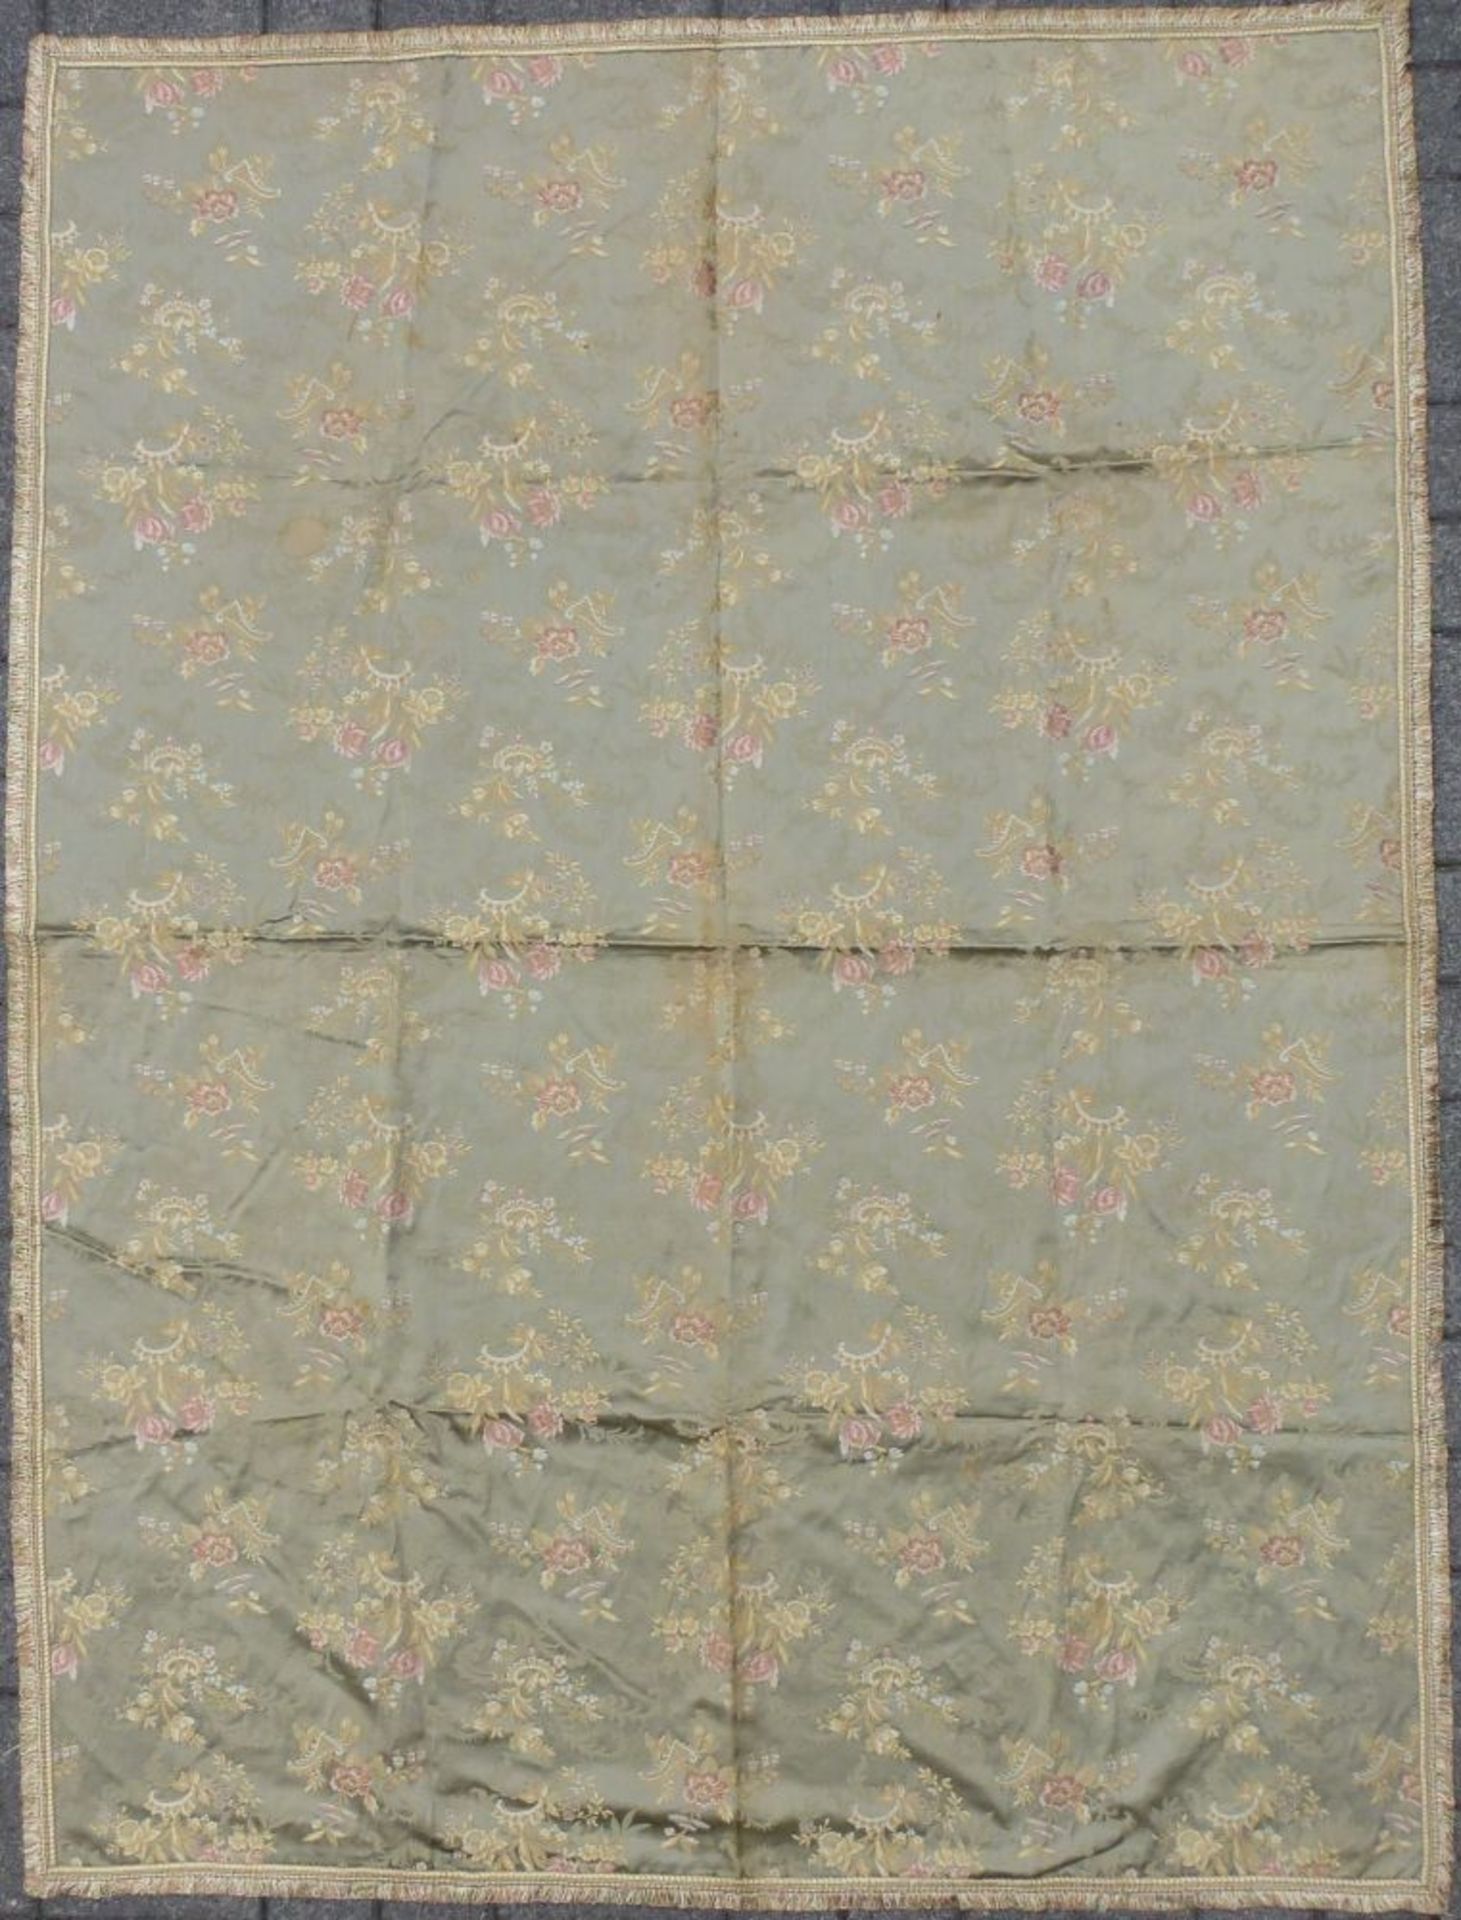 Brokat-Deckelindgrün, Blütenornamente, Litzeneinfassung, seidengefütert, 170x125cm